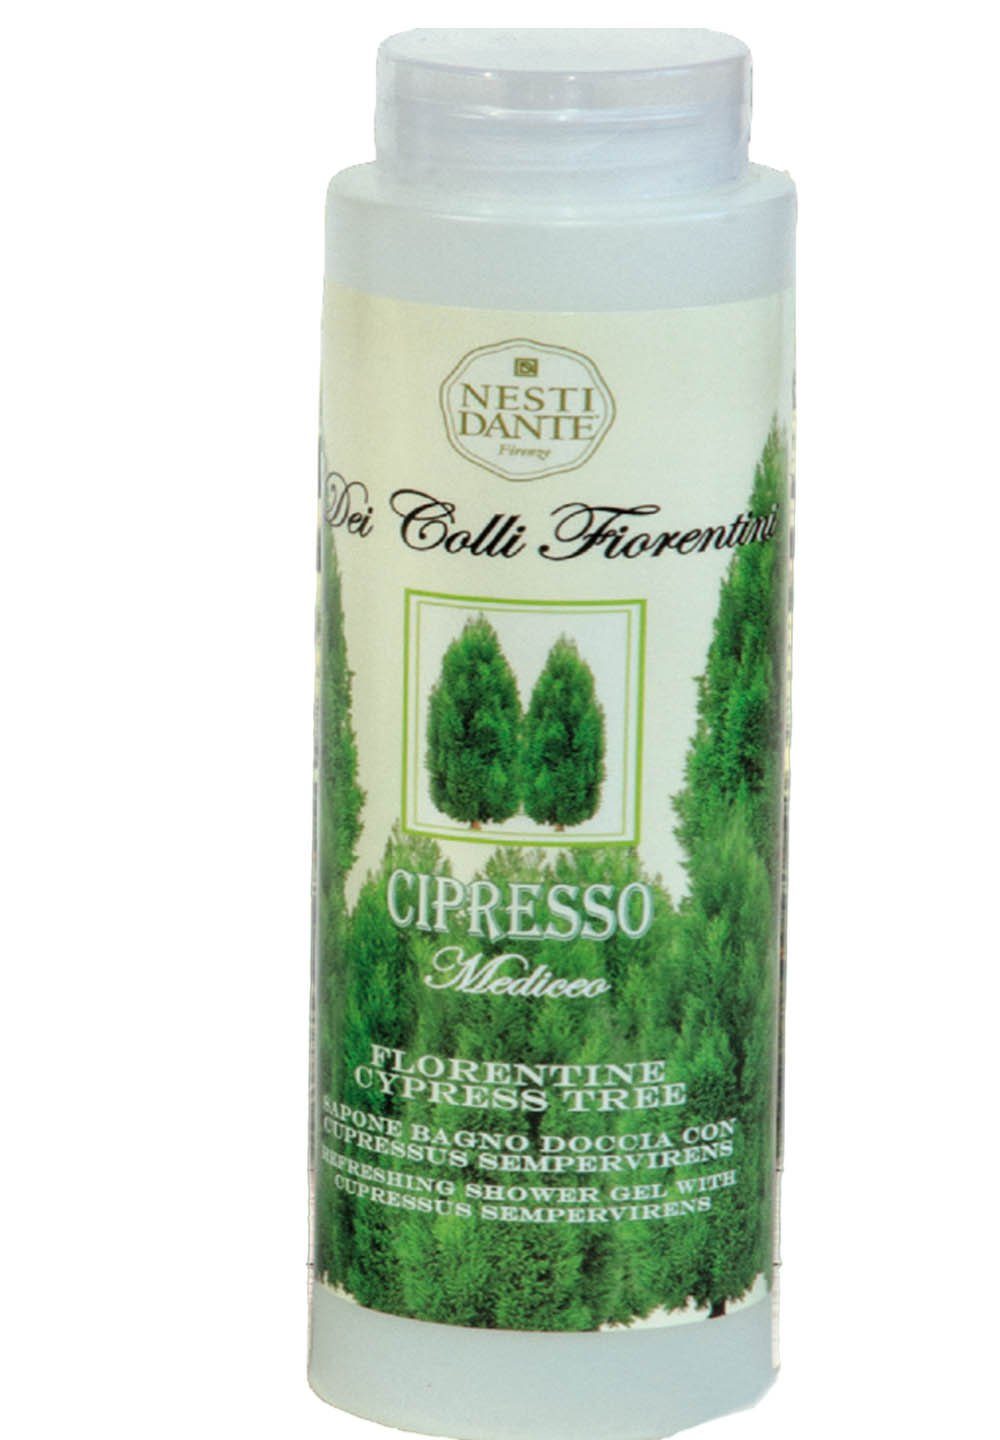 Cypress Tree Dante Fiorent. ml Duschgel Nesti 300